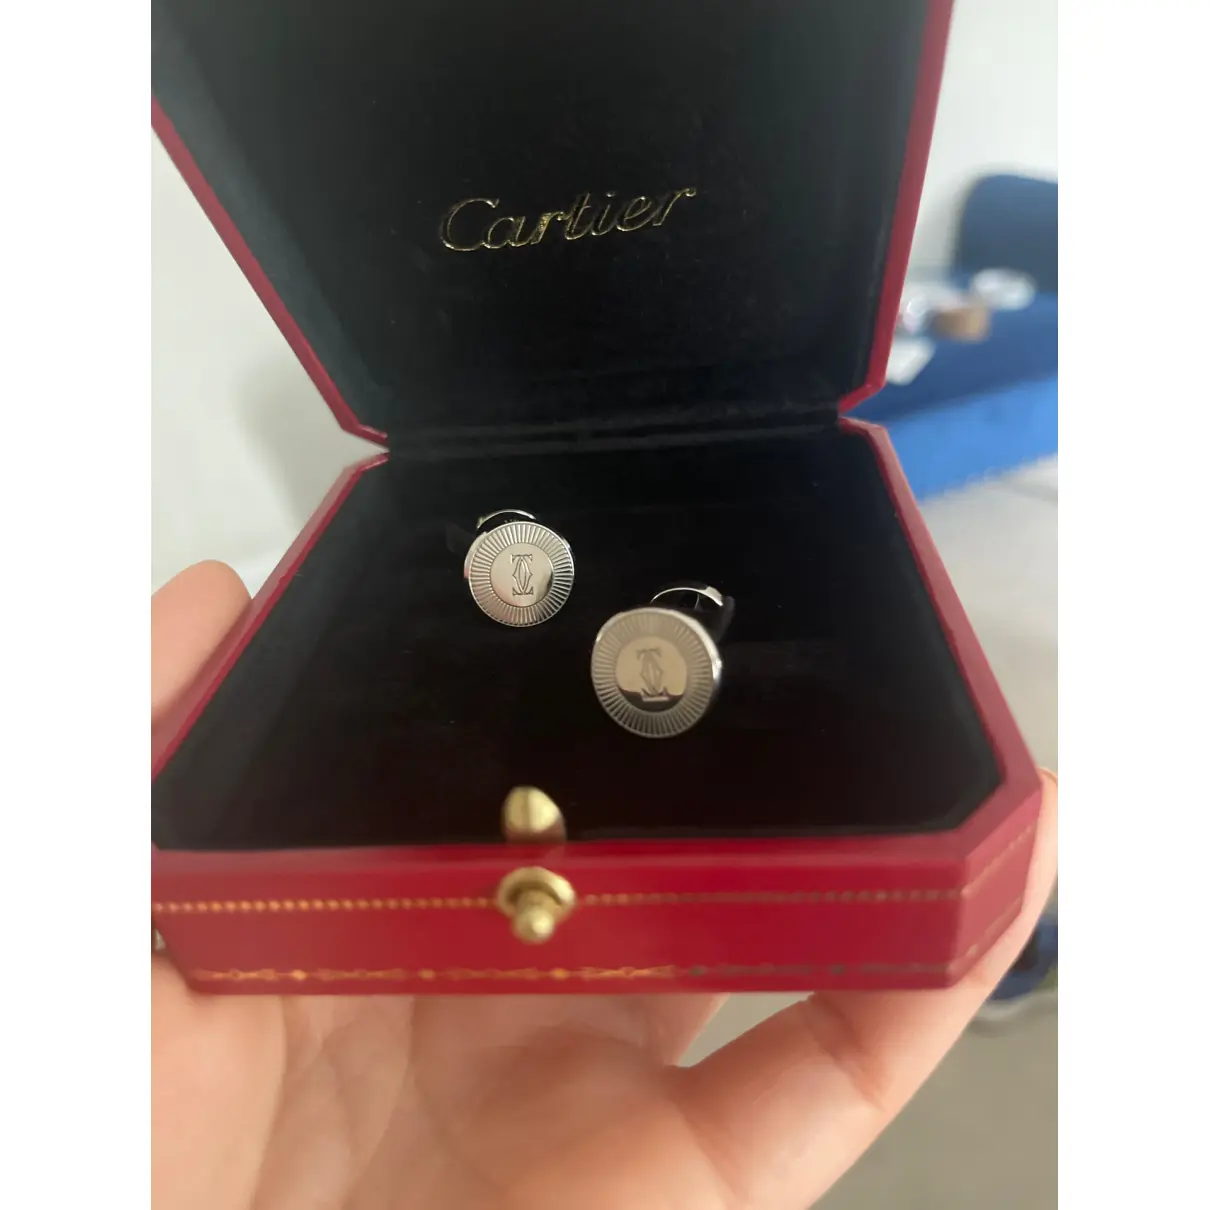 Buy Cartier Silver cufflinks online